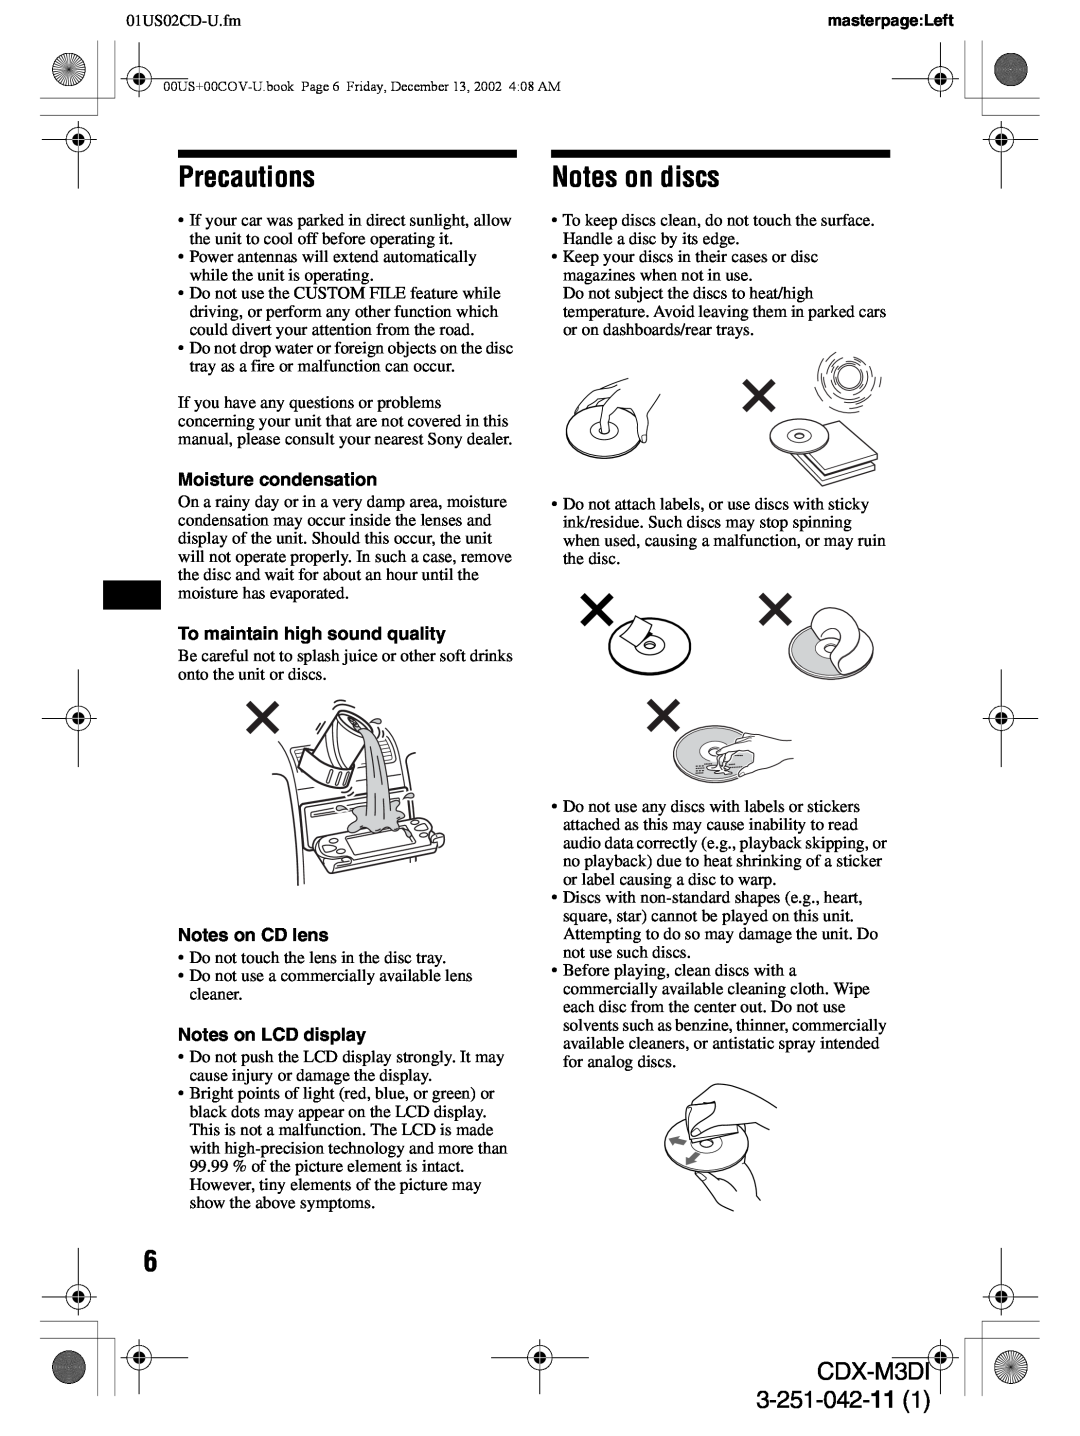 Sony CDX-M3DI operating instructions Precautions, Notes on discs, 3-251-042-11, 01US02CD-U.fm 